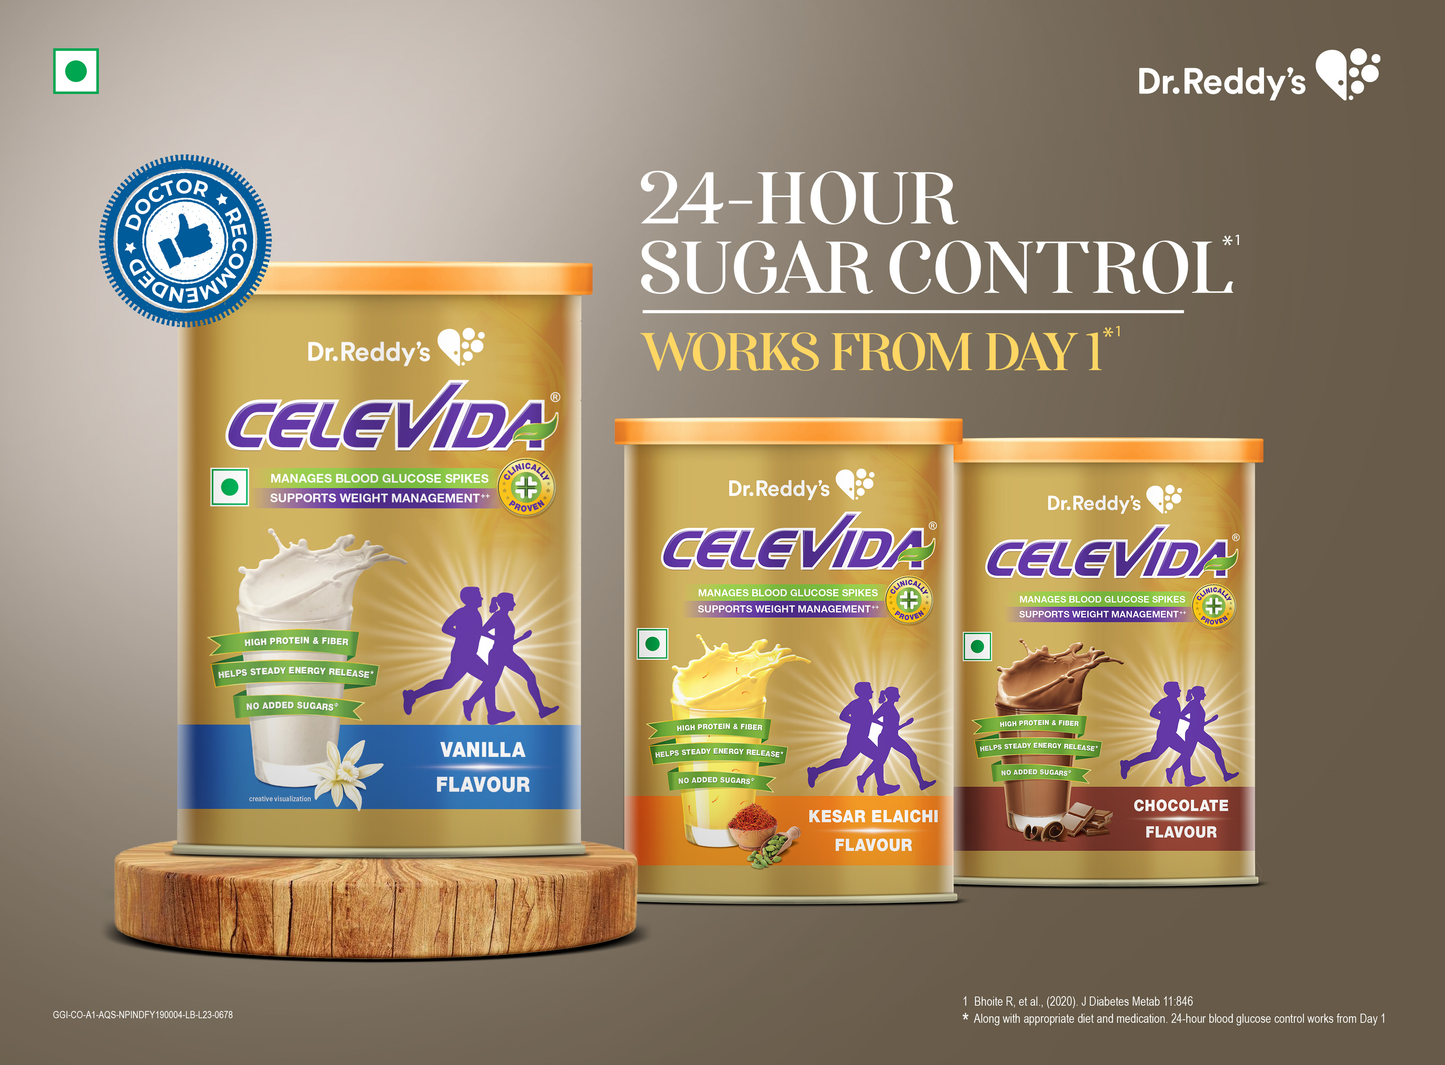 Dr. Reddy's Celevida for Diabetes Management- Nutrition Health Drink, Kesar Elaichi Flavour